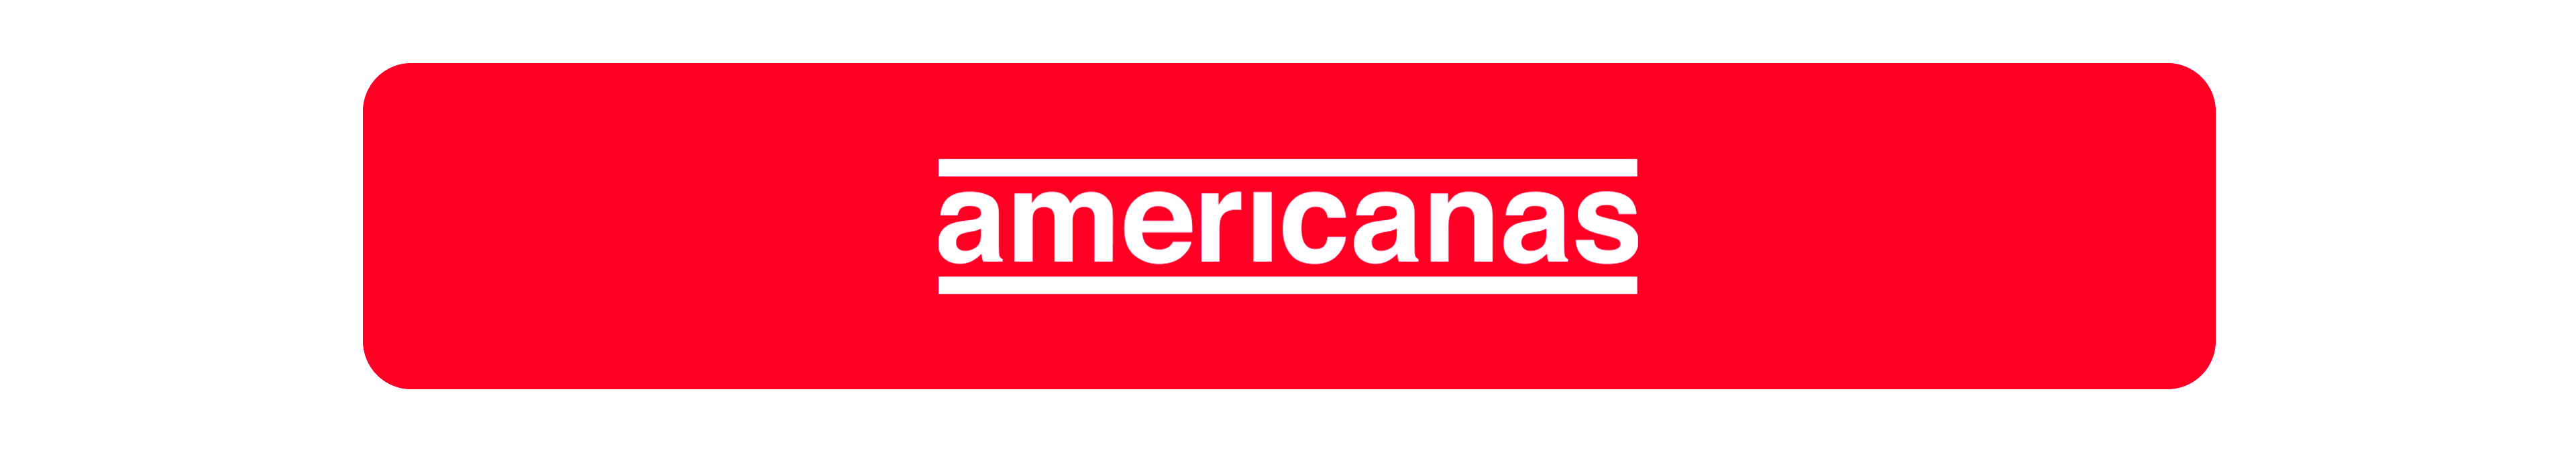 Americanas - externo